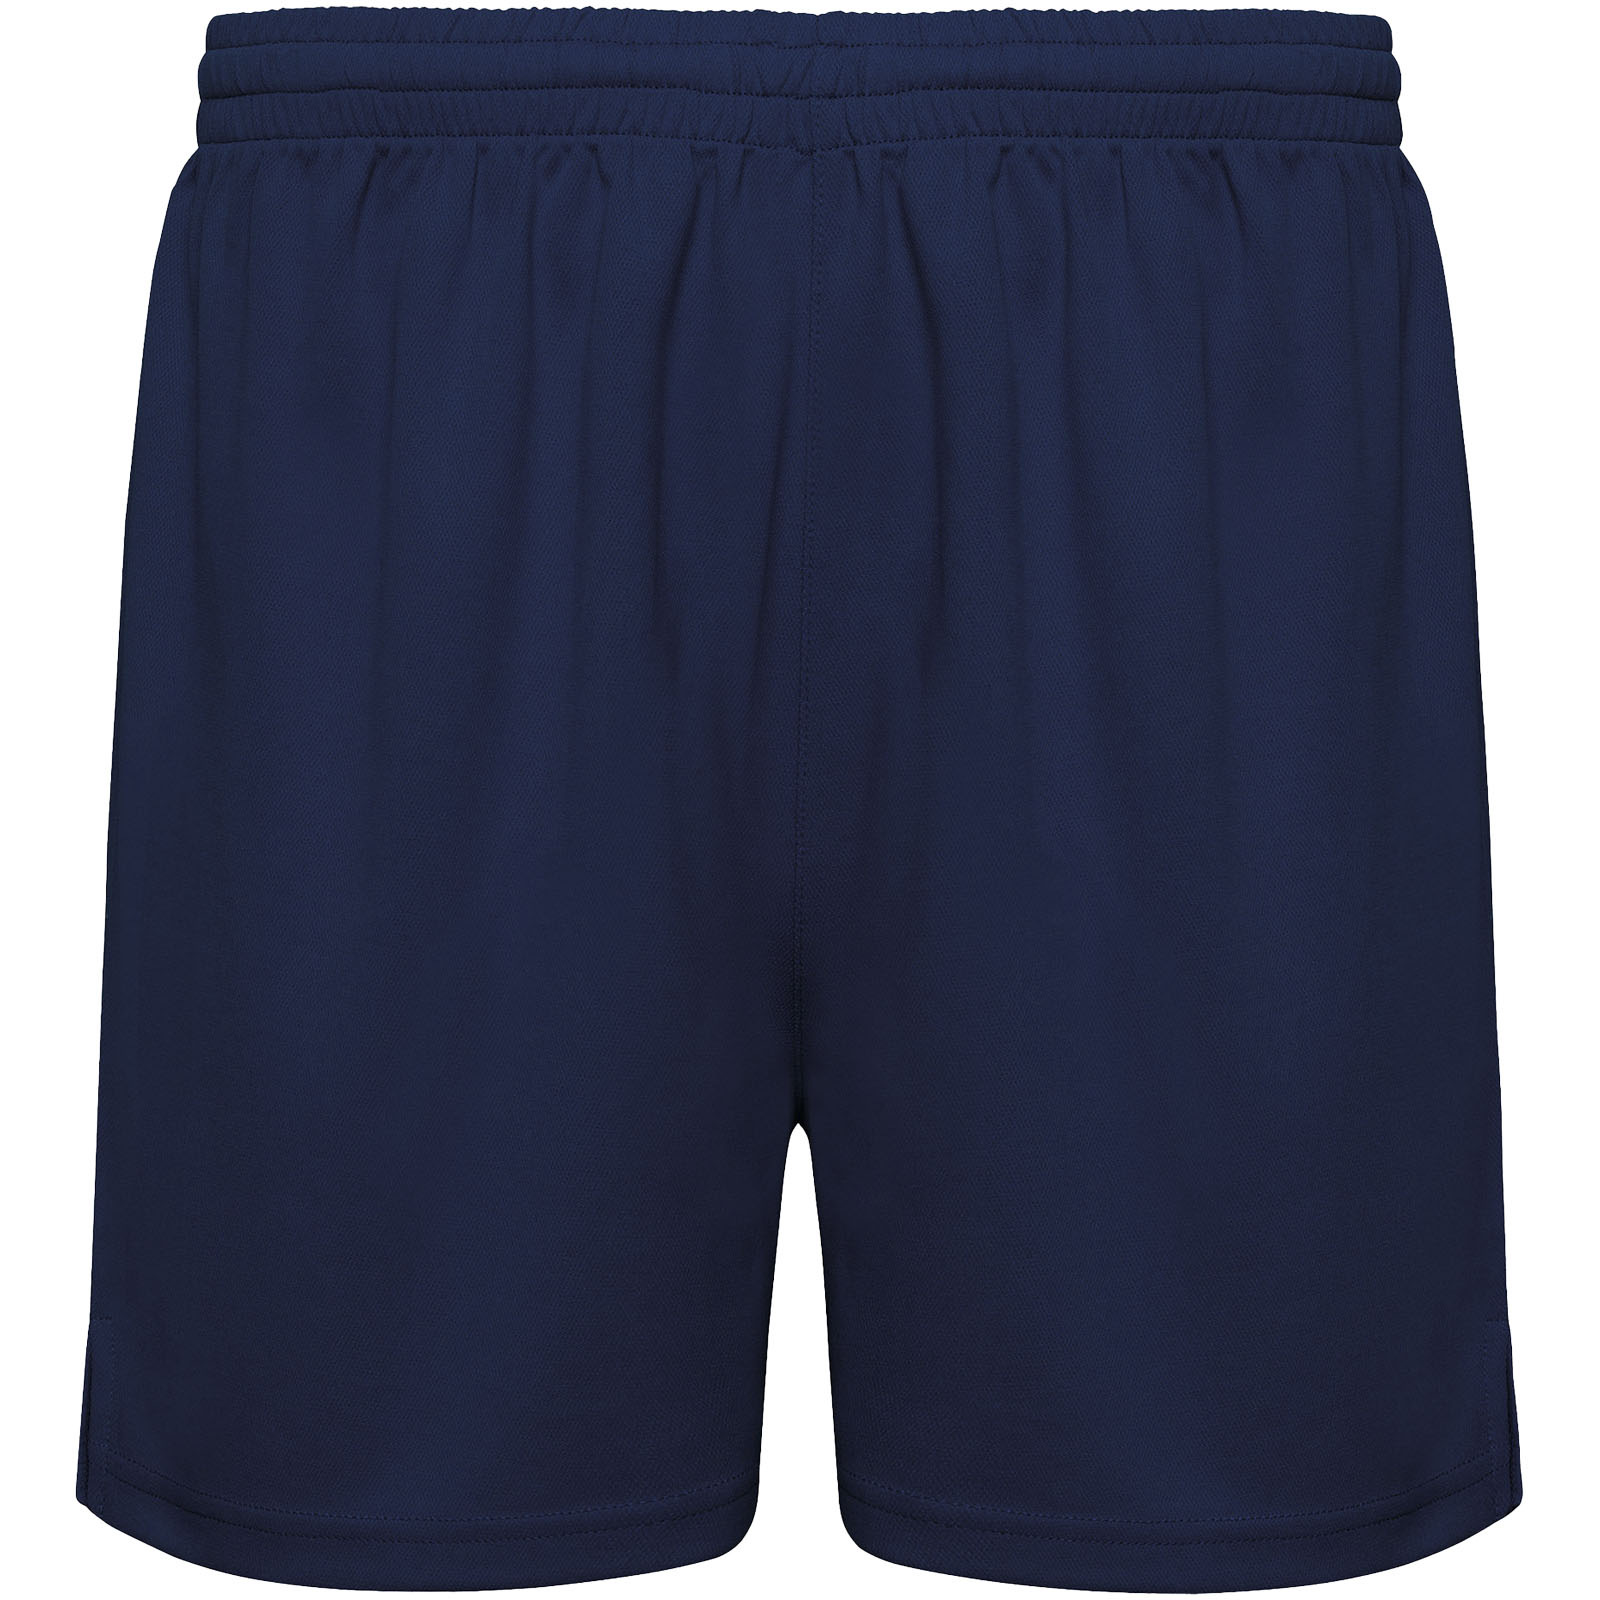 Advertising Shorts - Player unisex sports shorts - 0